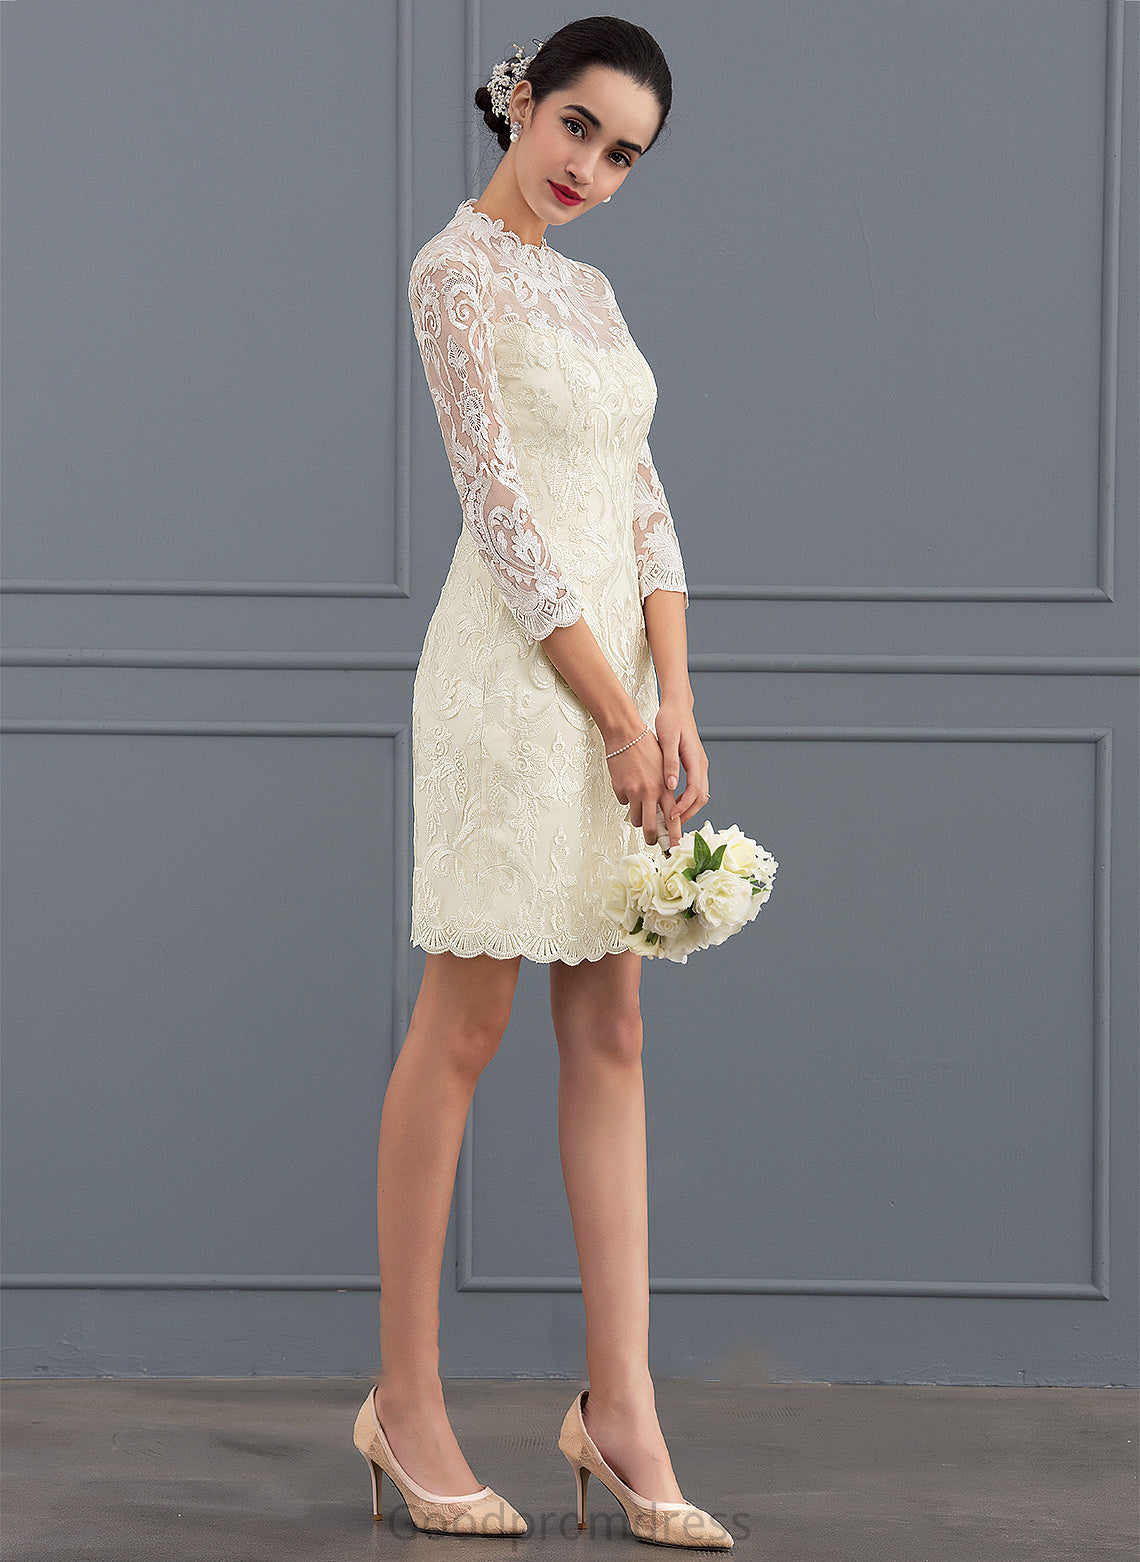 Dress Lace Sheath/Column Alison Knee-Length Wedding Wedding Dresses Neck High